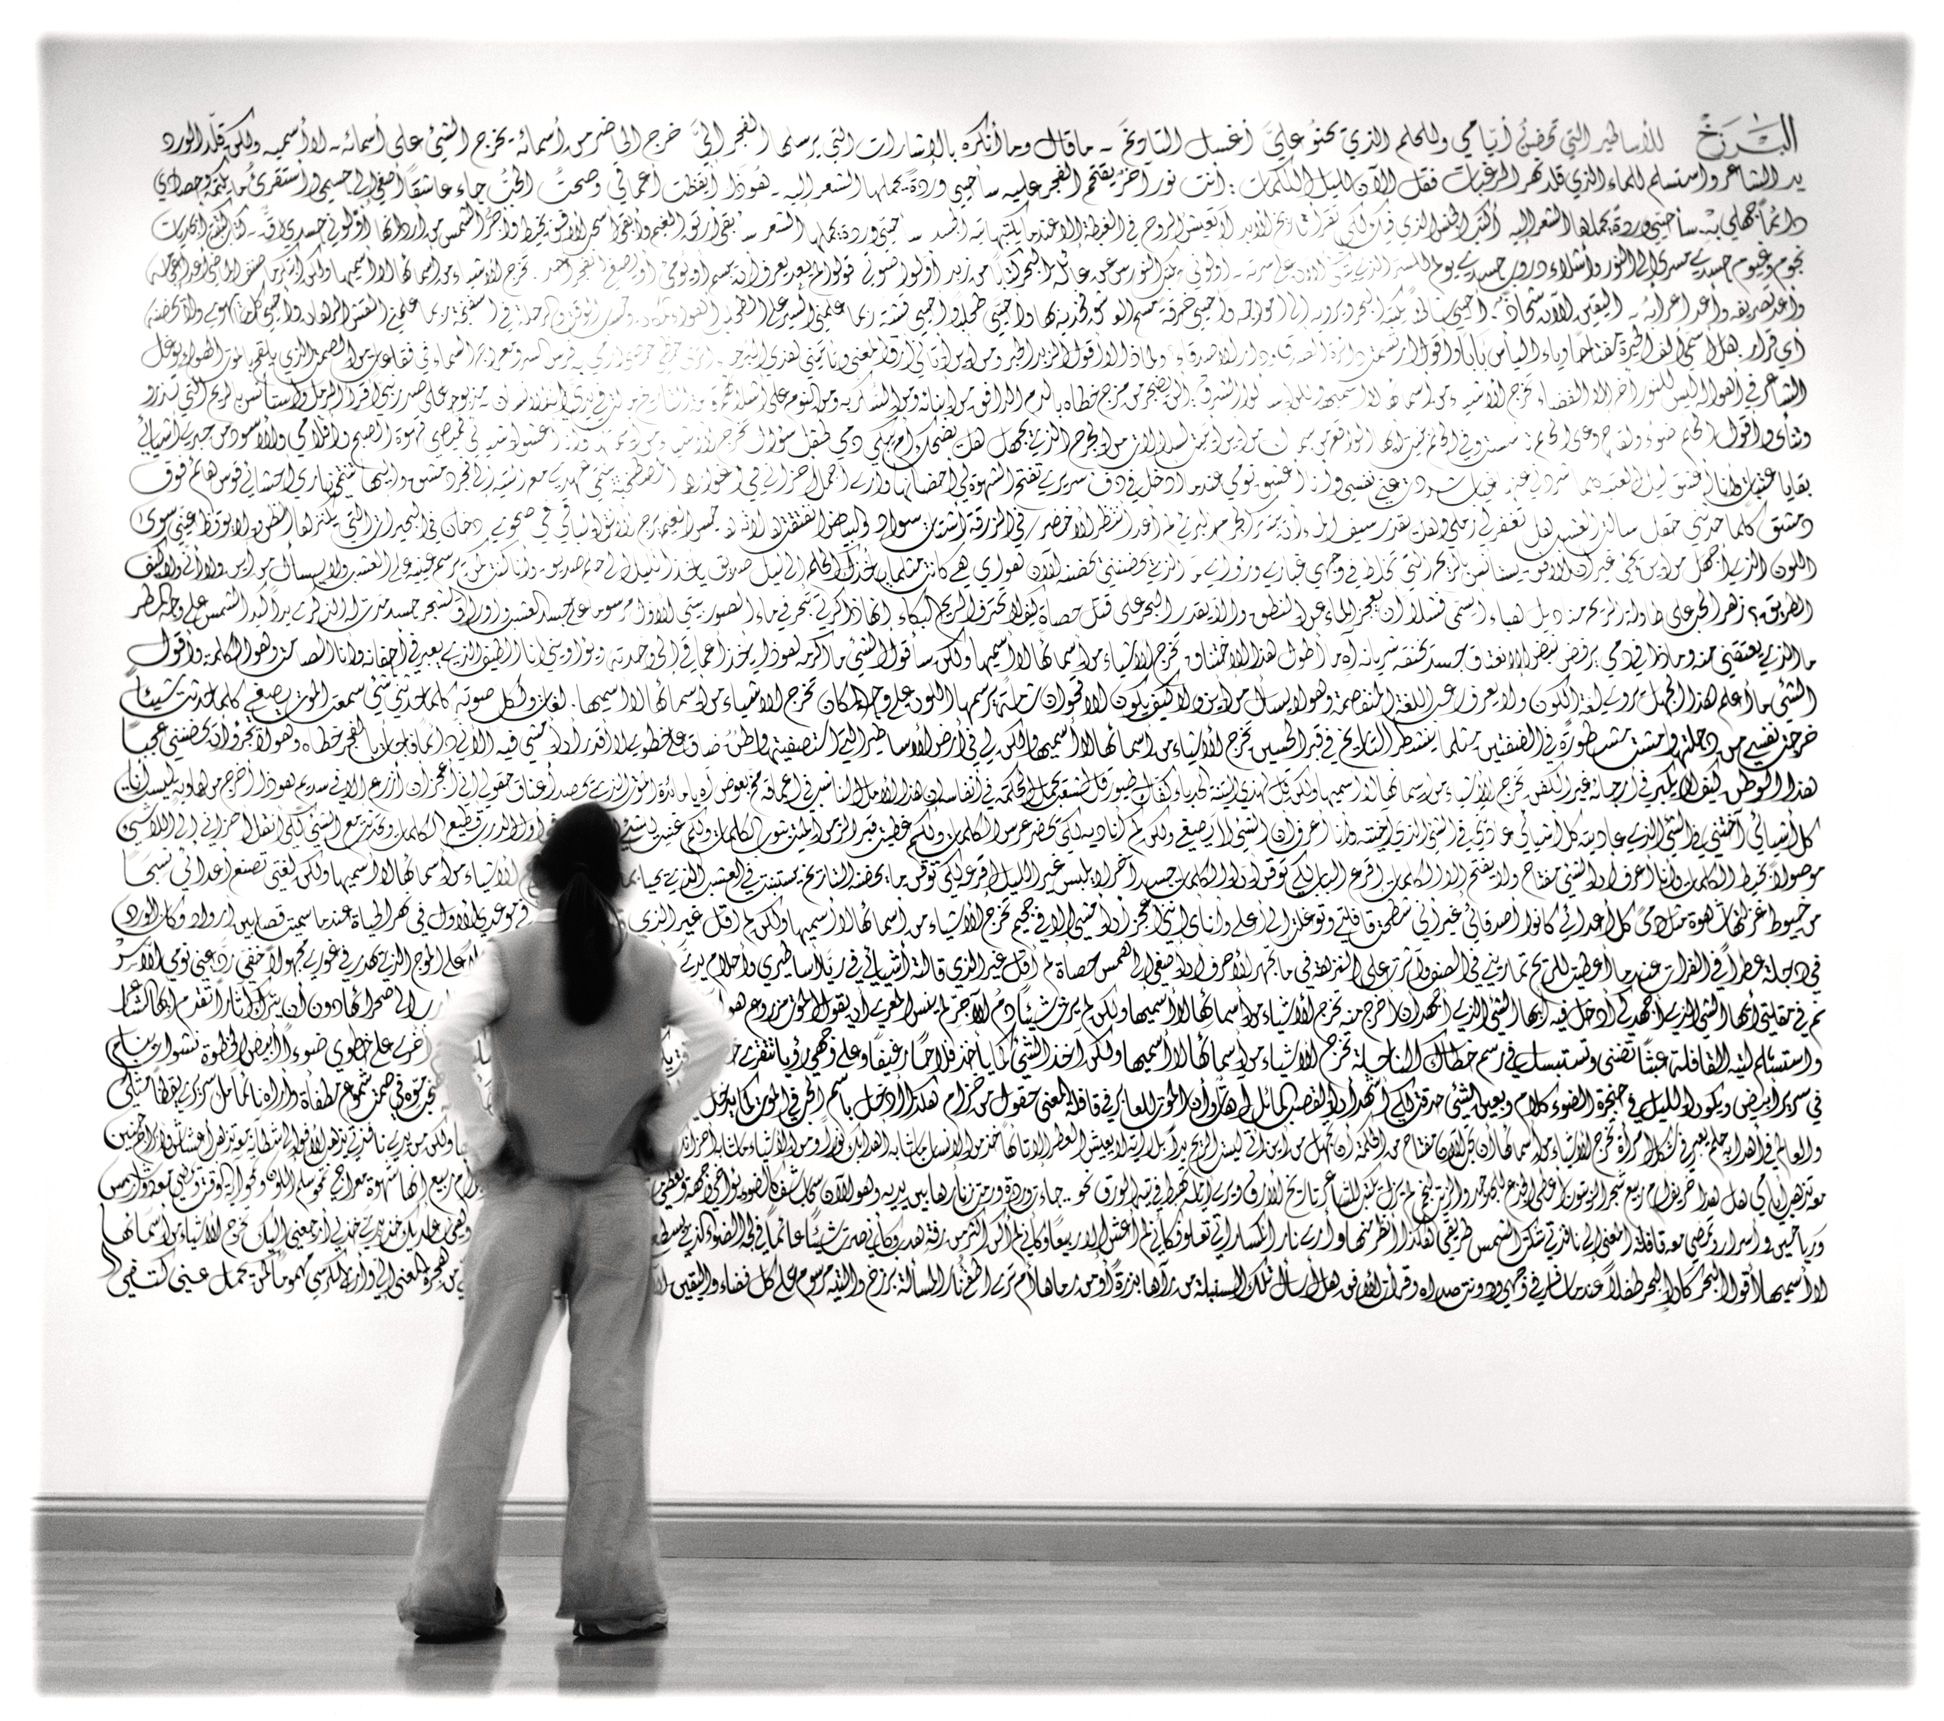  <i>"al-Barzakh"</i> - verse by contemporary Syrian poet Adonis. A calligraphic installation in 4 Walls Gallery, Amman, Jordan